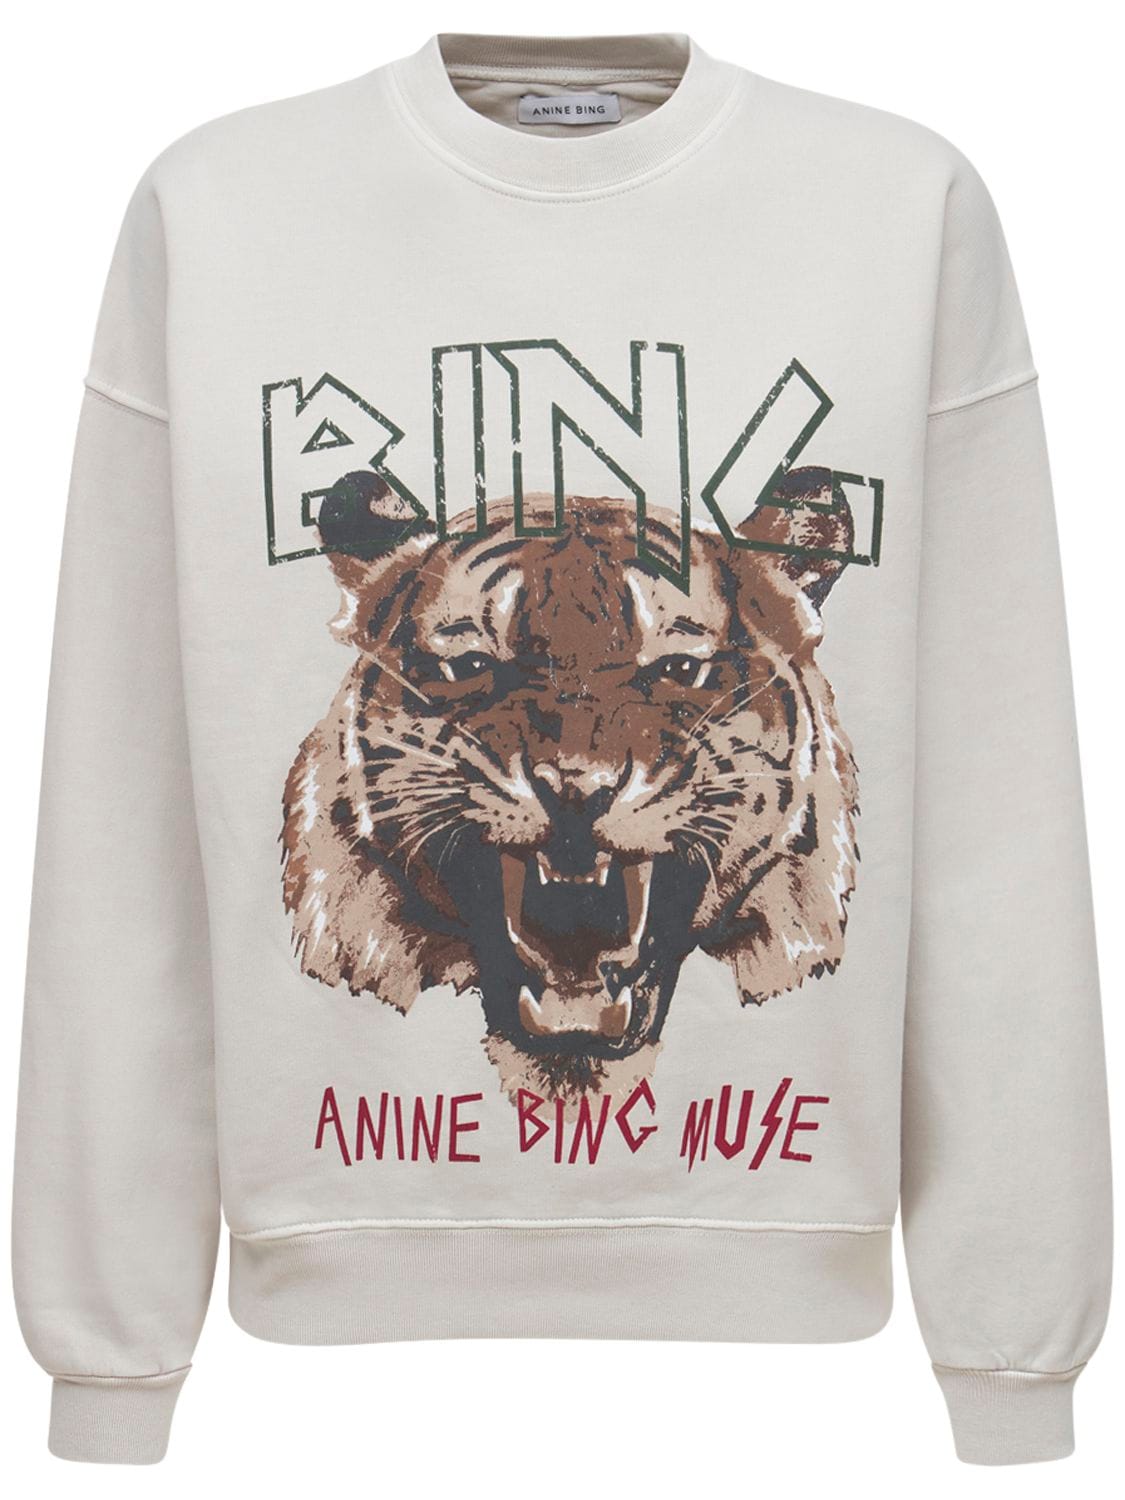 Tiger Printed Organic Cotton Sweatshirt